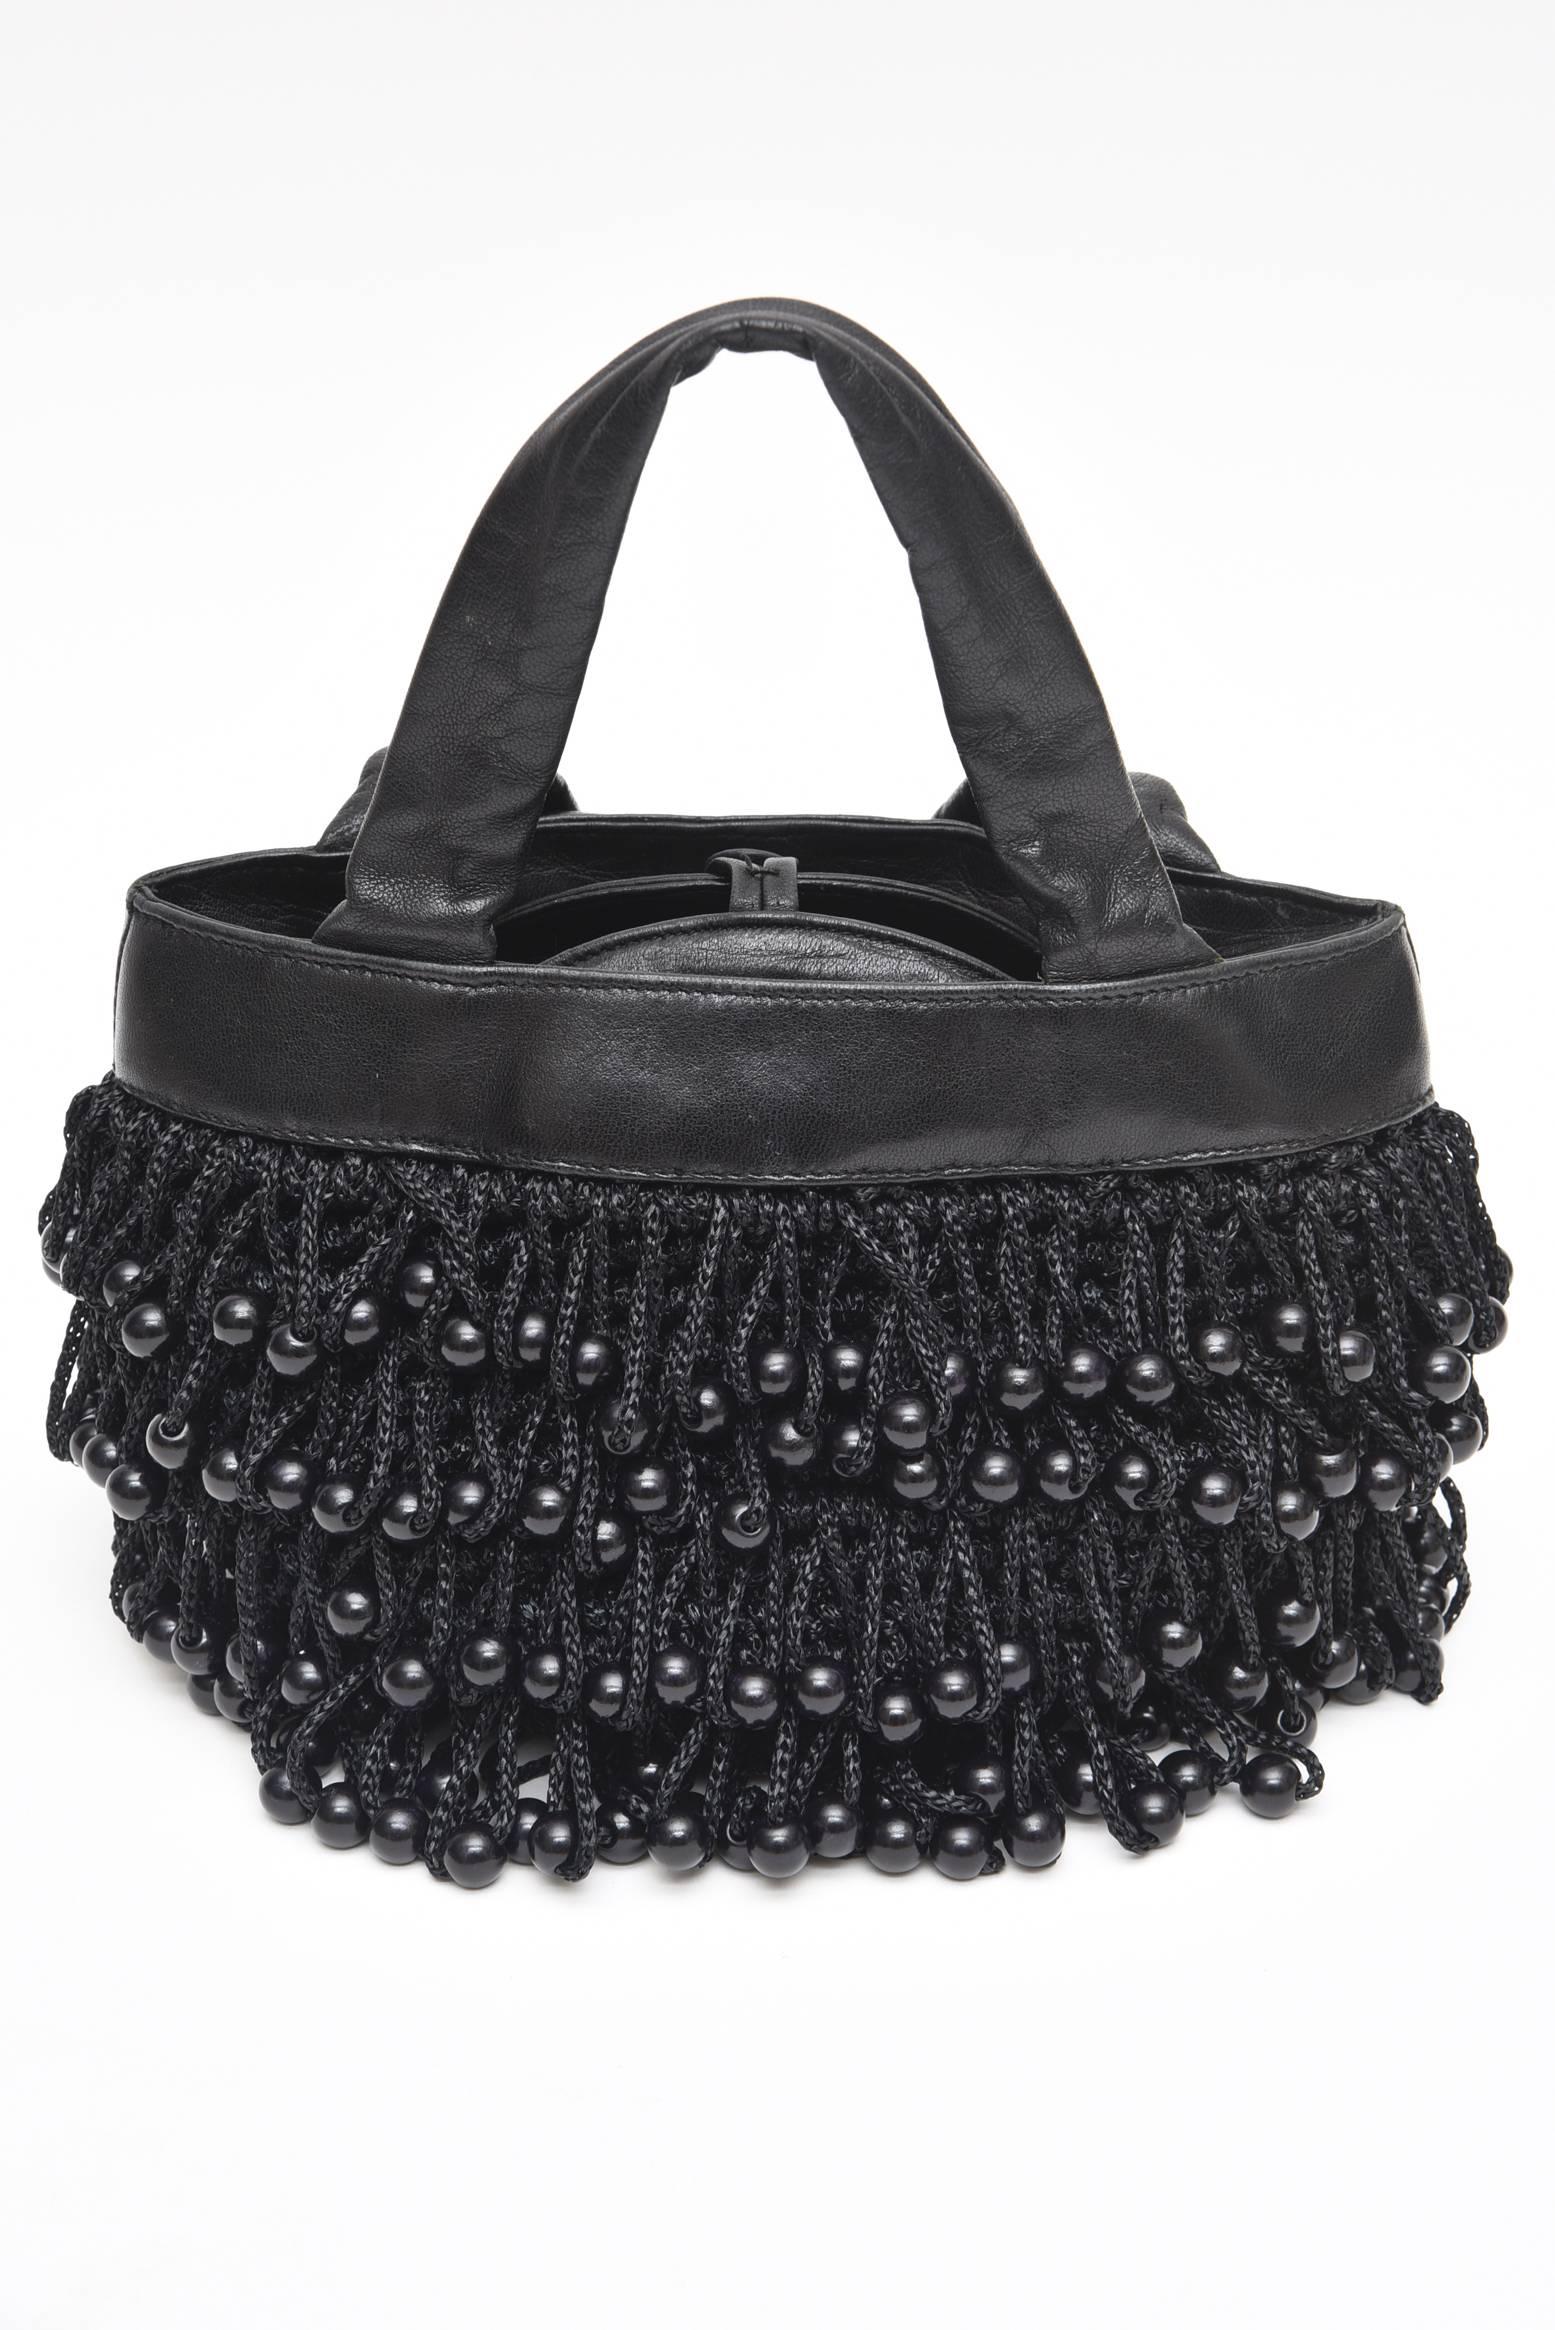 Koret Vintage Black Leather, Crochet, Black Beaded Bag 1